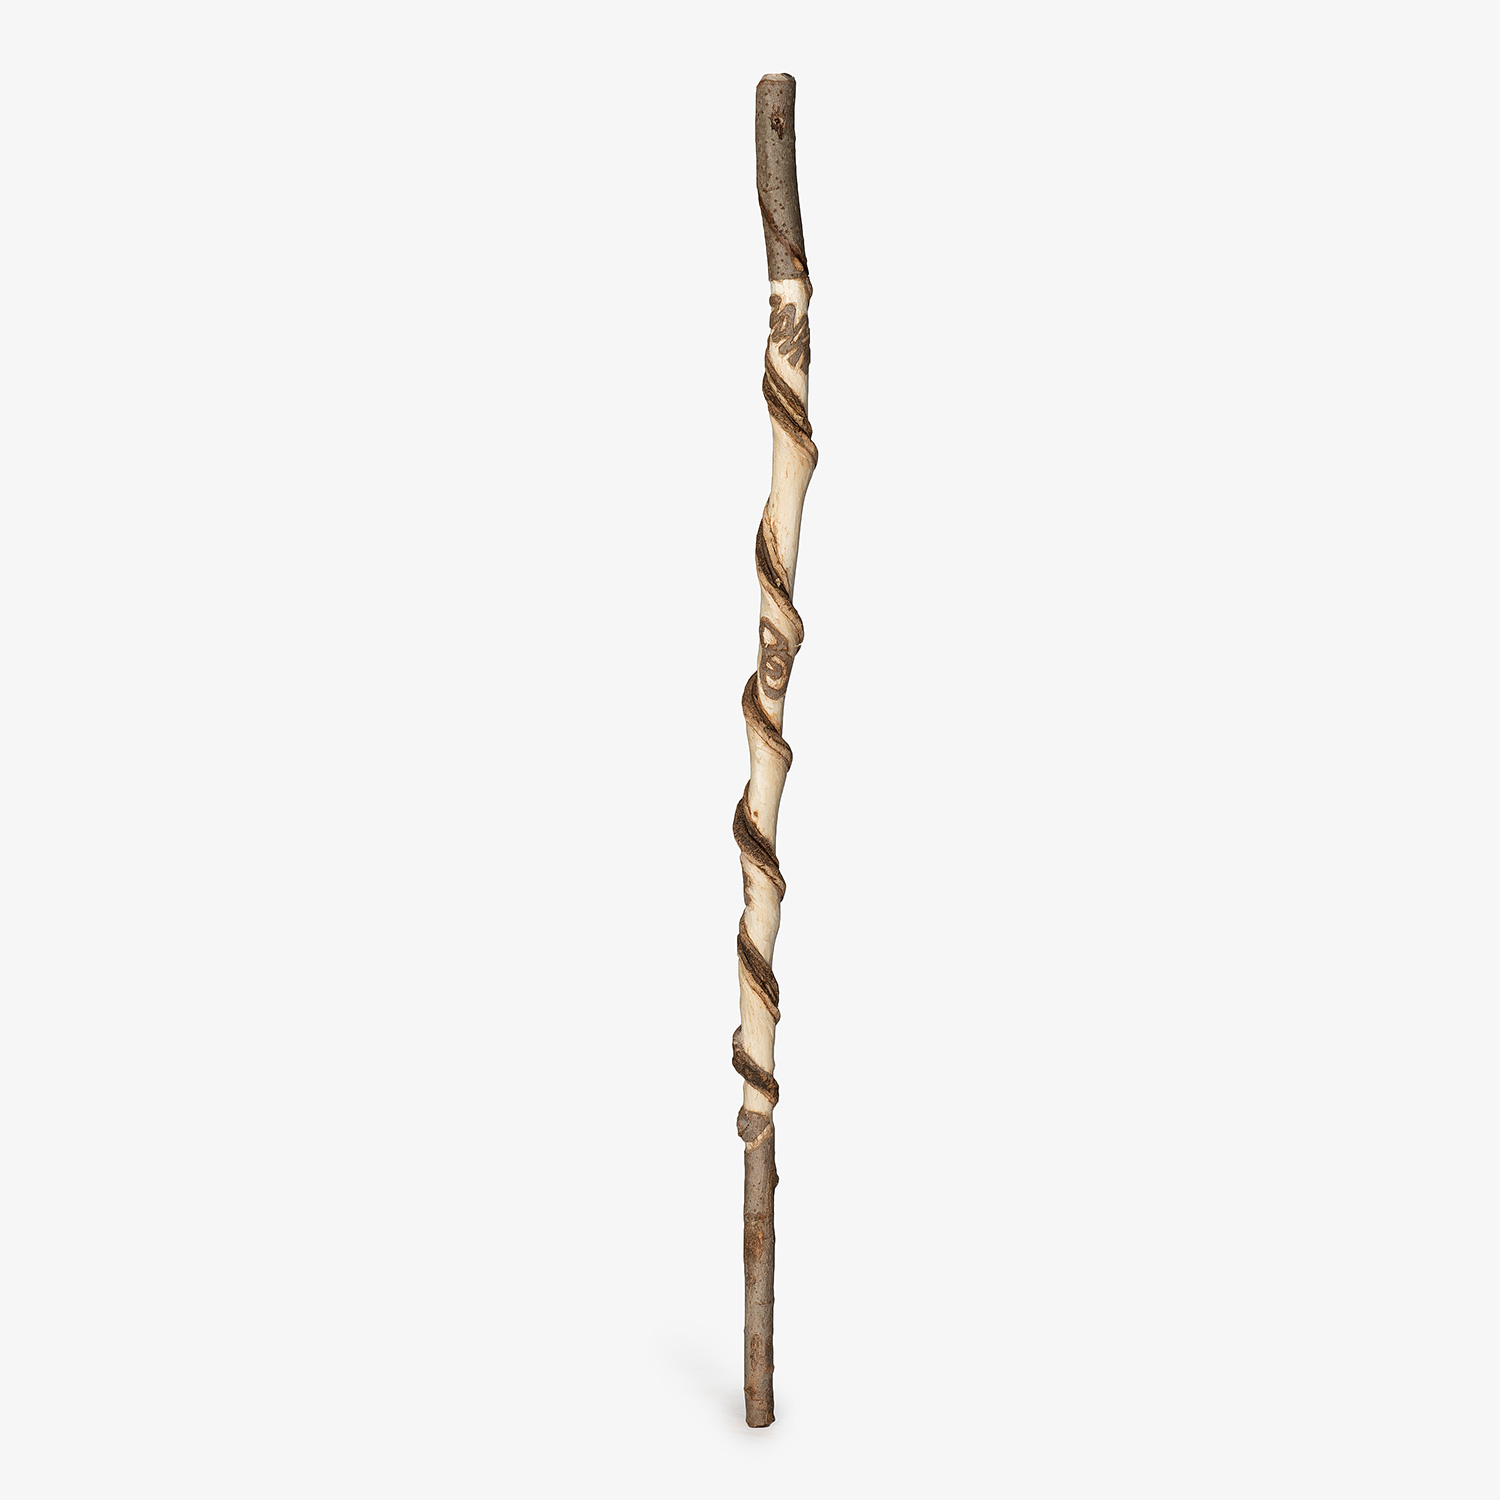 Hiking stick, 115 cm length